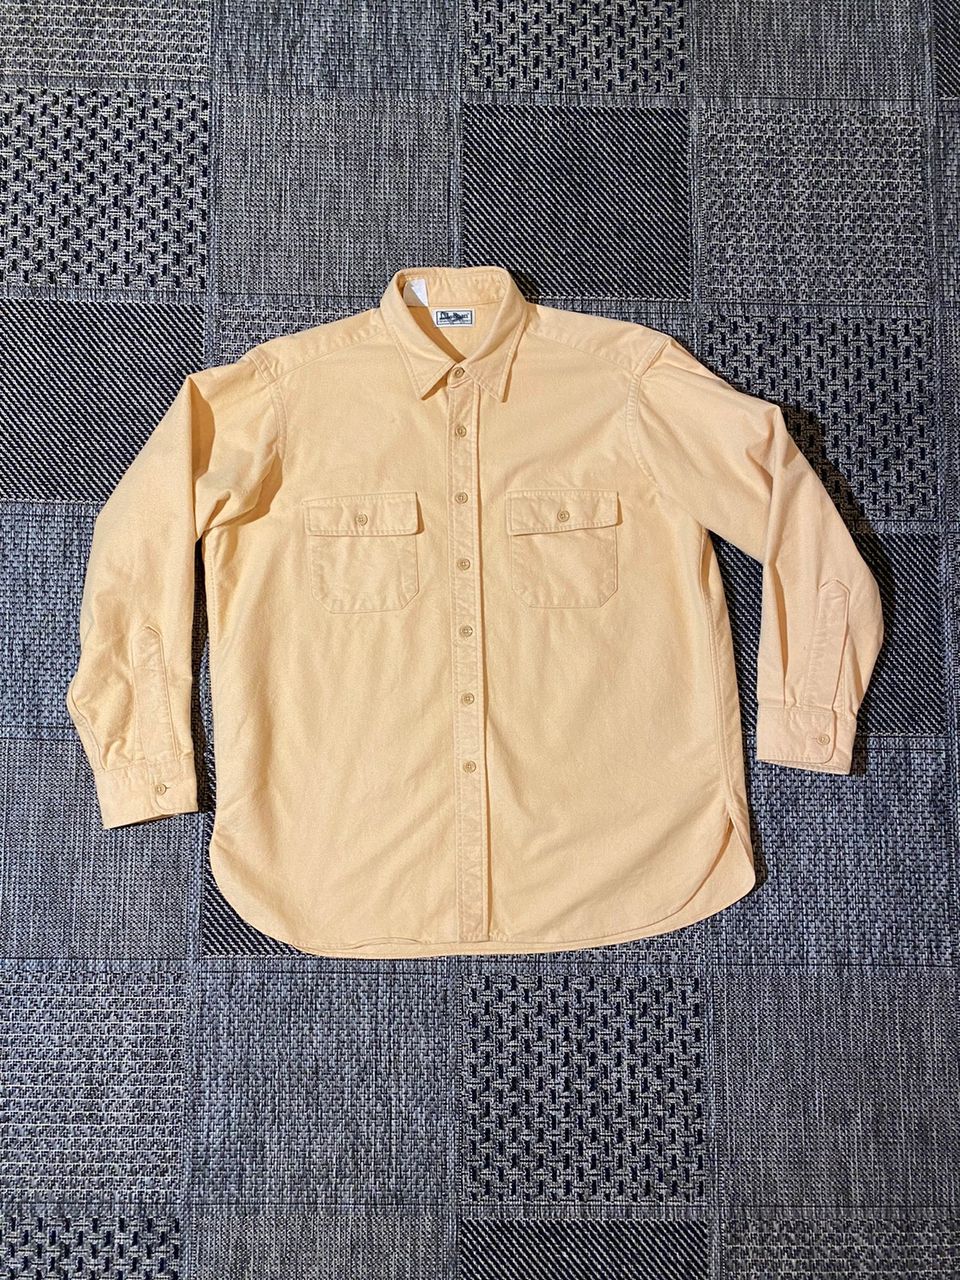 LL BEAN mens L chamois shirt 100%cotton flannel pastel peach light orange